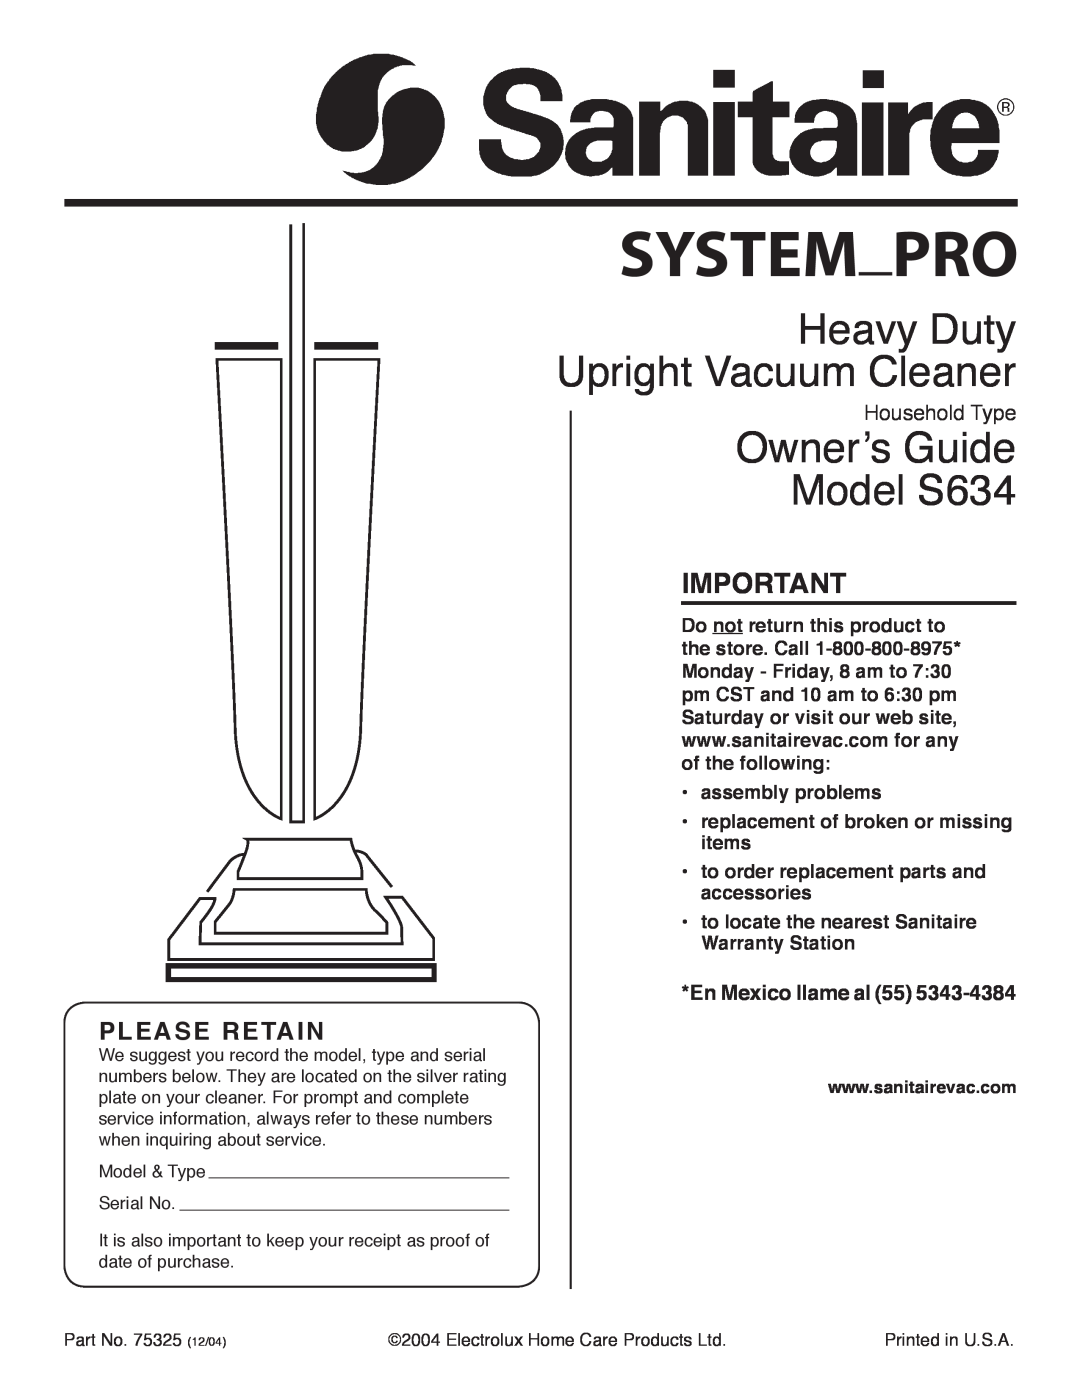 Sanitaire warranty En Mexico llame al, Heavy Duty Upright Vacuum Cleaner, Ownerʼs Guide Model S634, Please Retain 